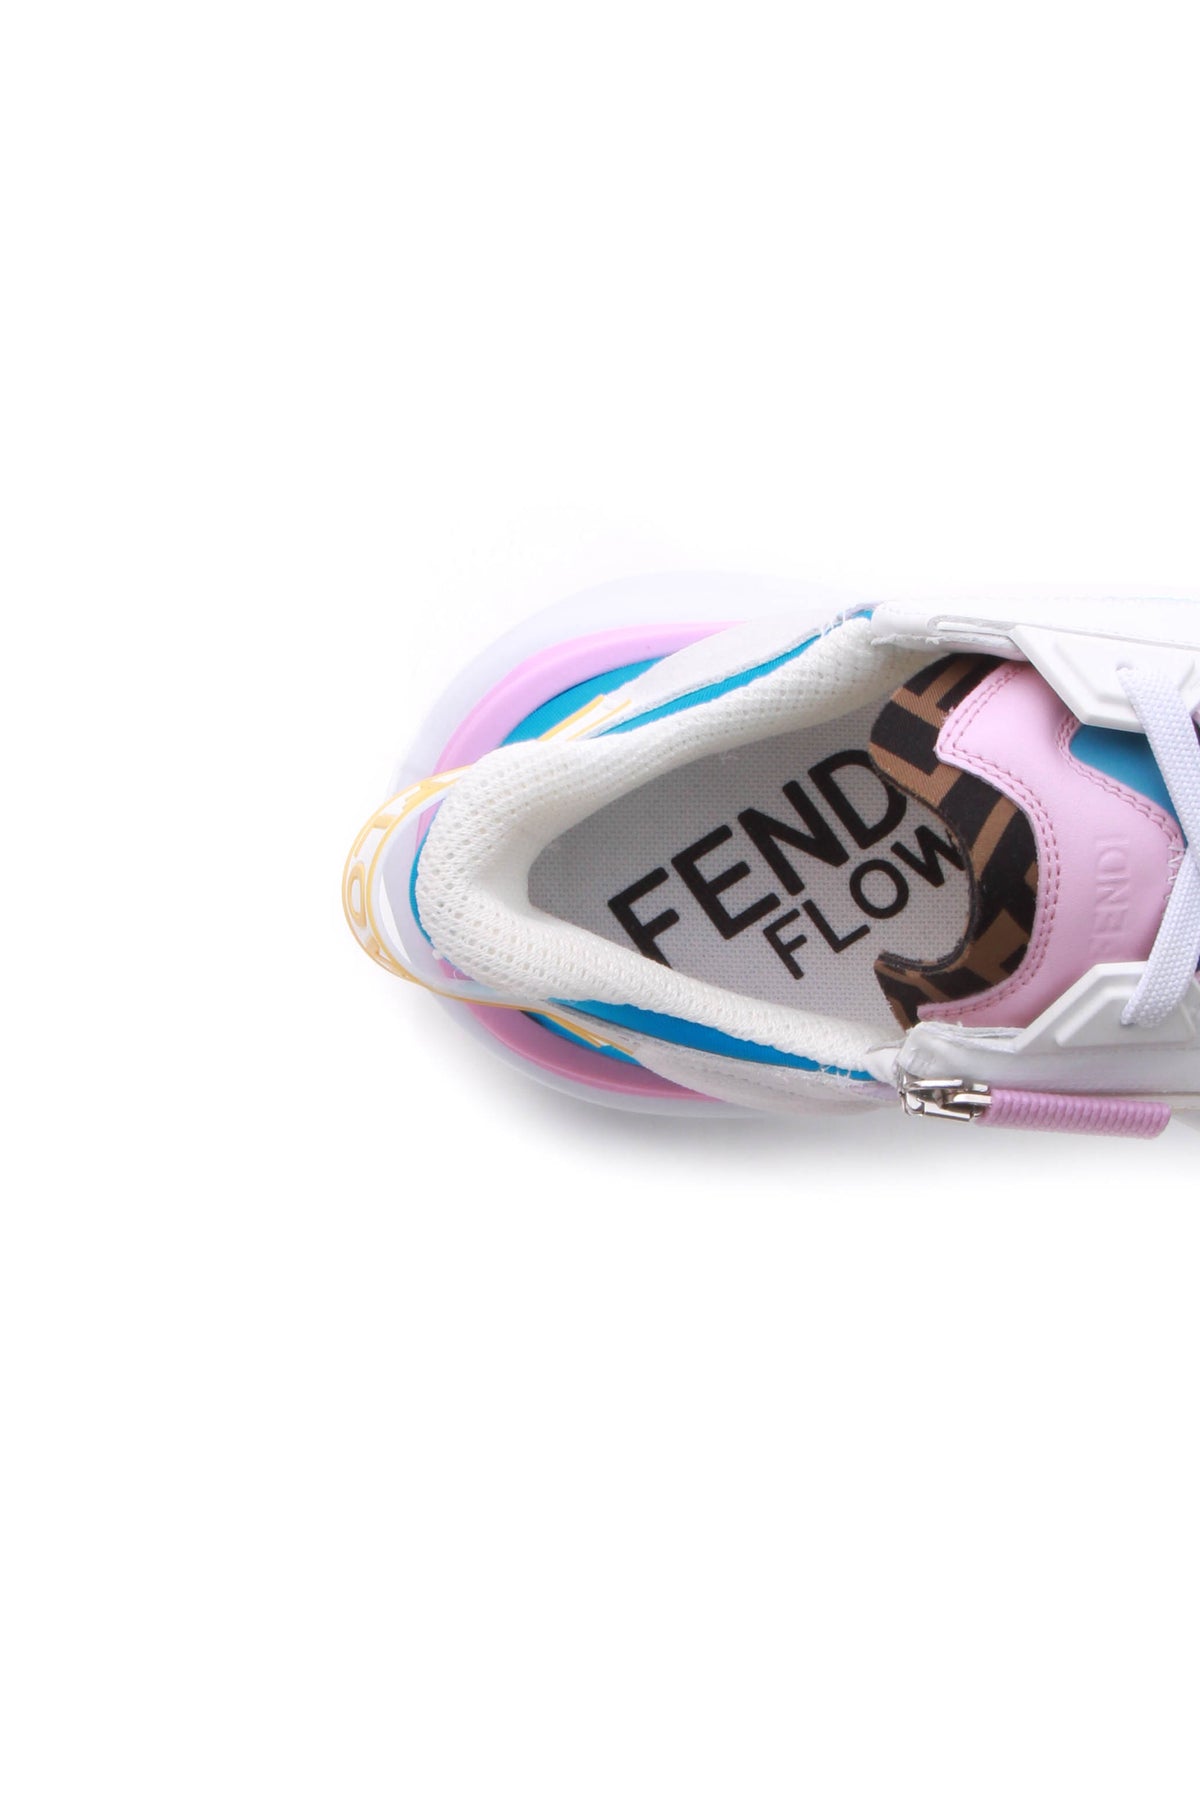 Details more than 152 fendi sneakers women latest